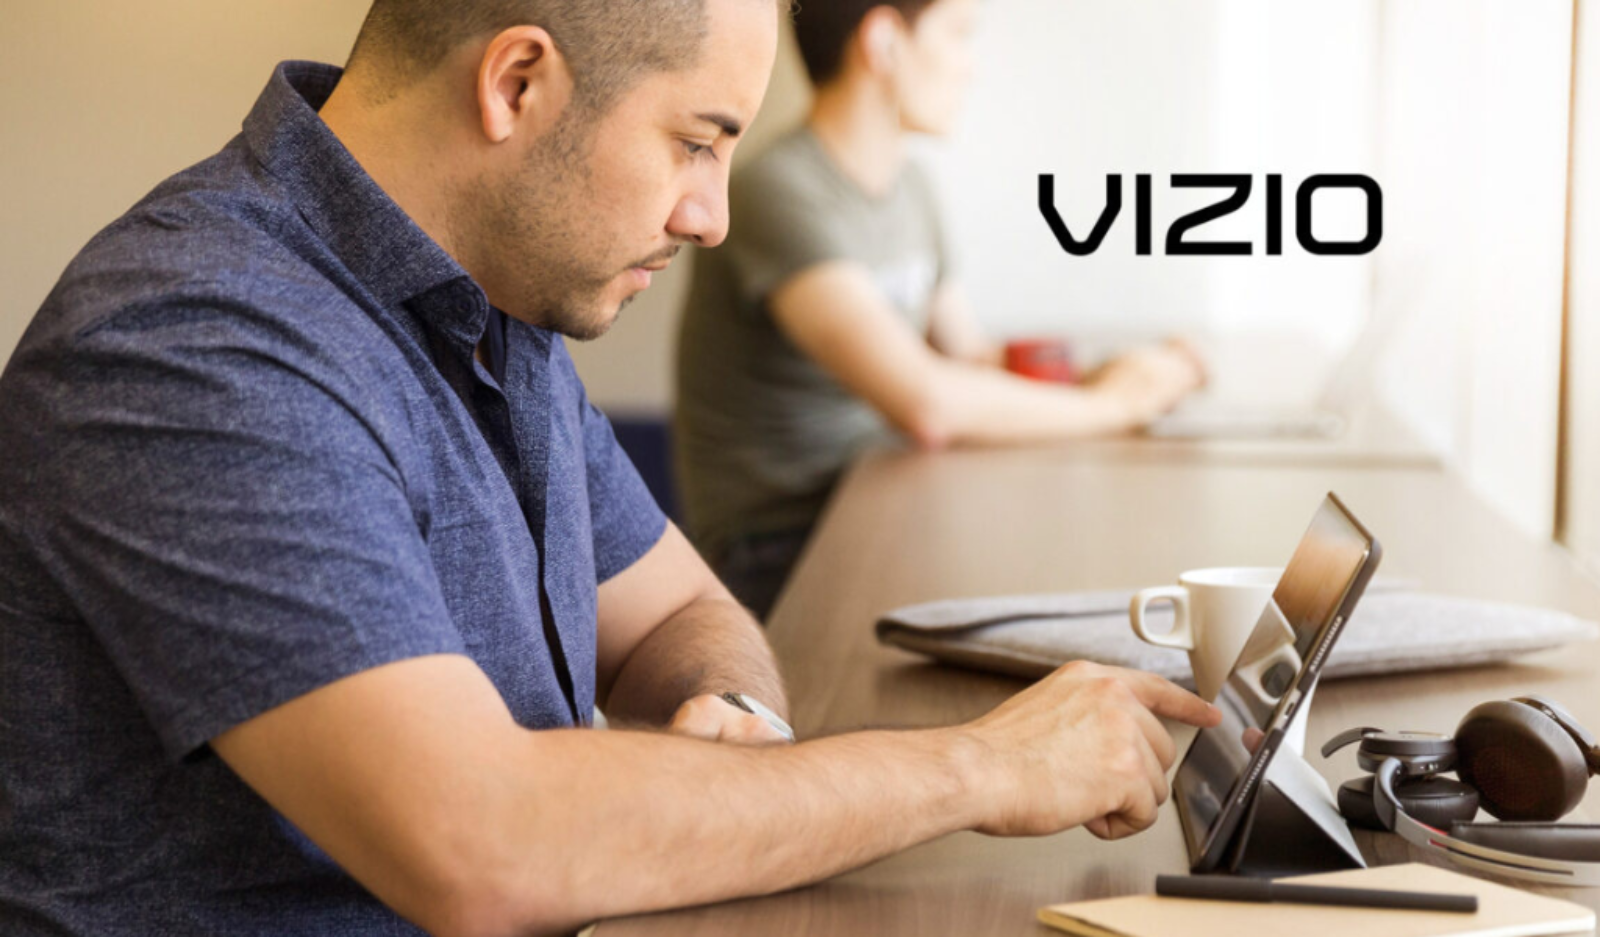 VIZIO推出跳跃广告连接线性电视与流媒体